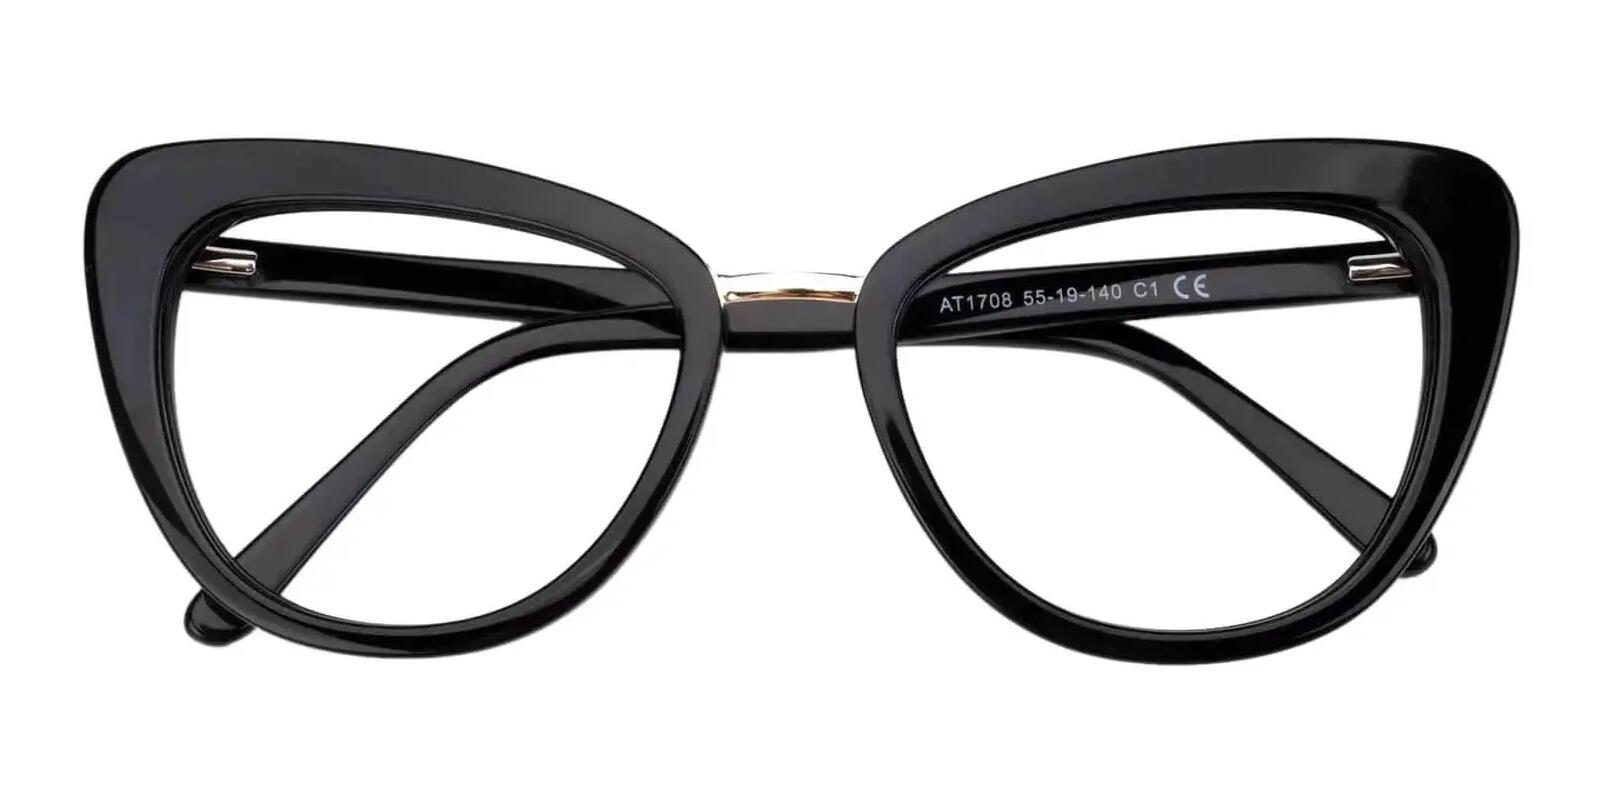 cateye glasses